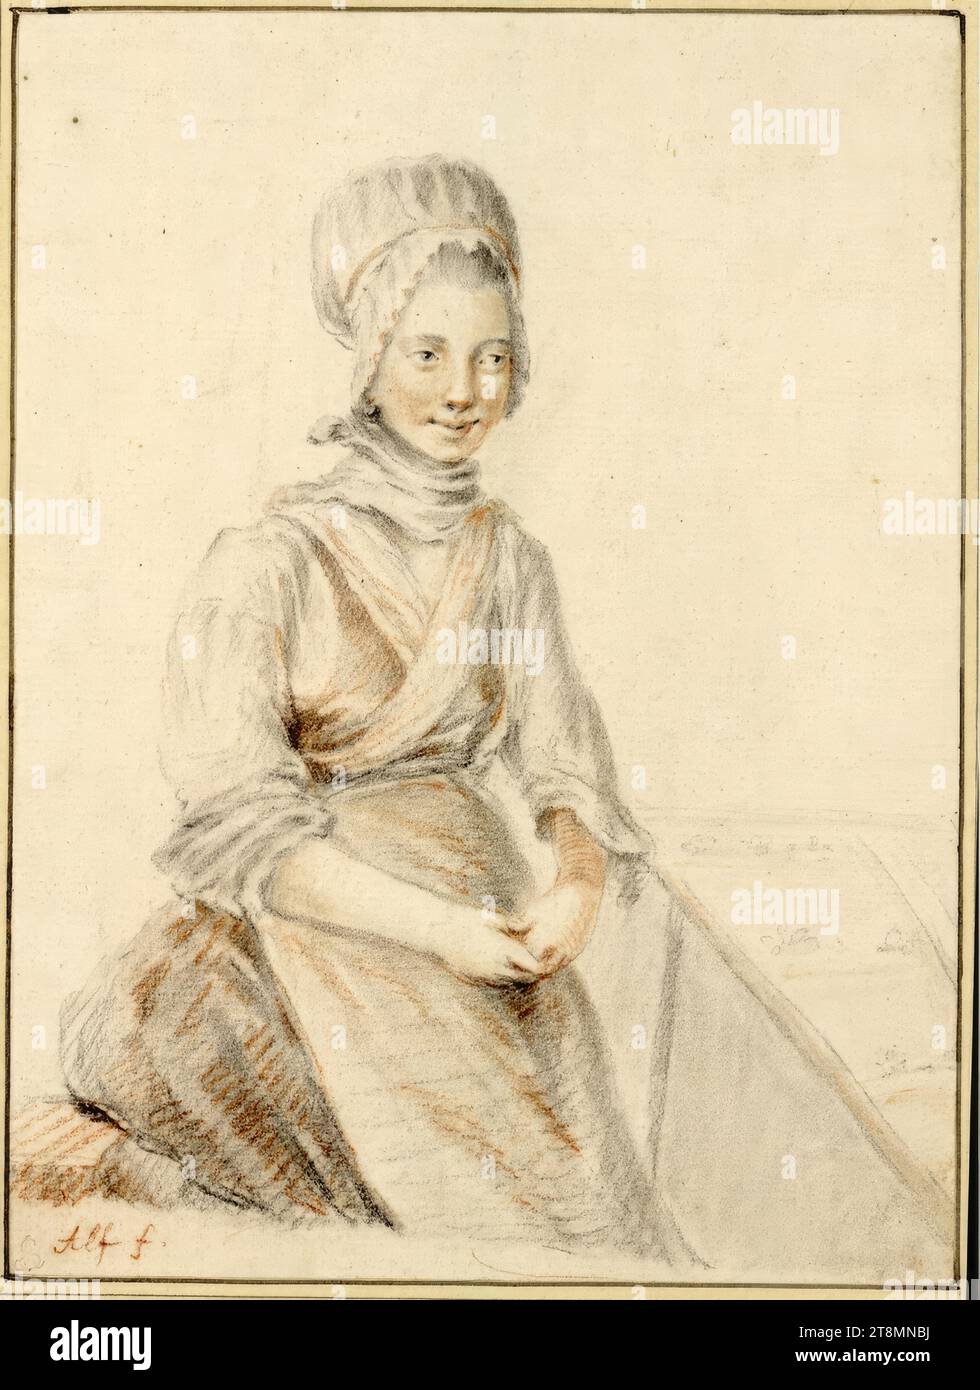 Girl seated next to an embroidery frame, Eusebius Johann Alphen (Vienna 1741 - 1772 Vienna), drawing, black chalk and sanguine, 22.2 x 16.6 cm (8 3/4 x 6 9/16 in.), l.l. Duke Albert of Saxe-Teschen, l.u. 'Alf f Stock Photo